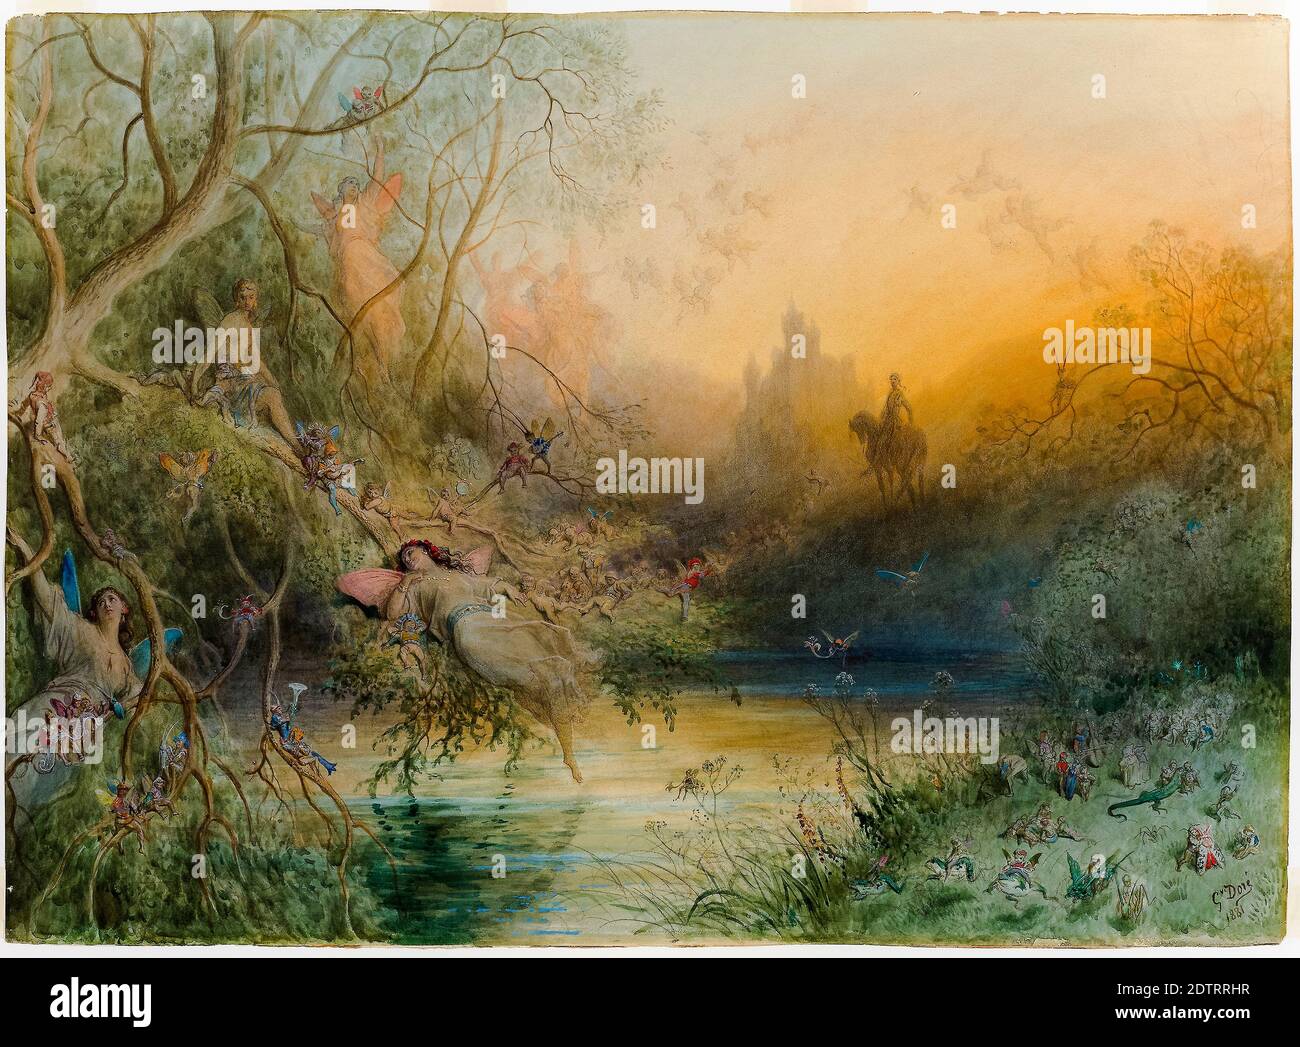 Pintura de hadas siglo 19 fotografías e imágenes de alta resolución - Alamy